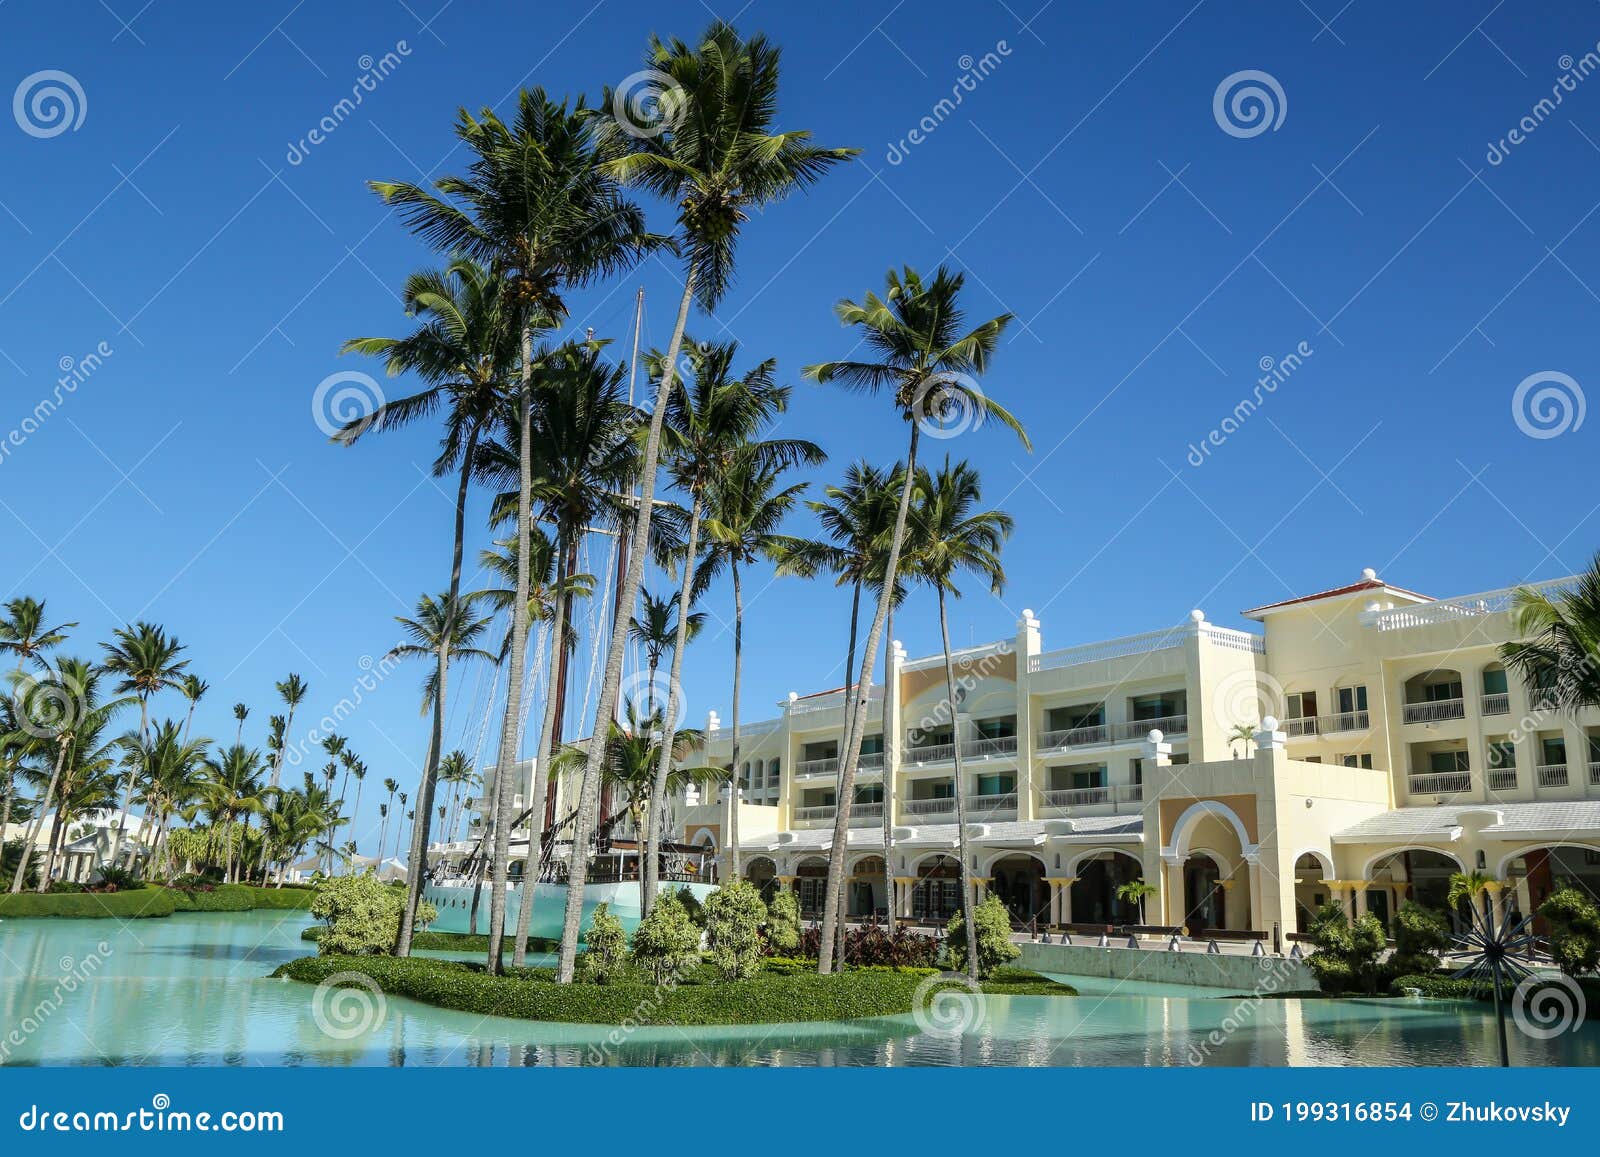 Iberostar Grand Hotel Bavaro Resort In Punta Cana Dominican Republic Editorial Stock Image Image Of Boardwalk Dominican 199316854